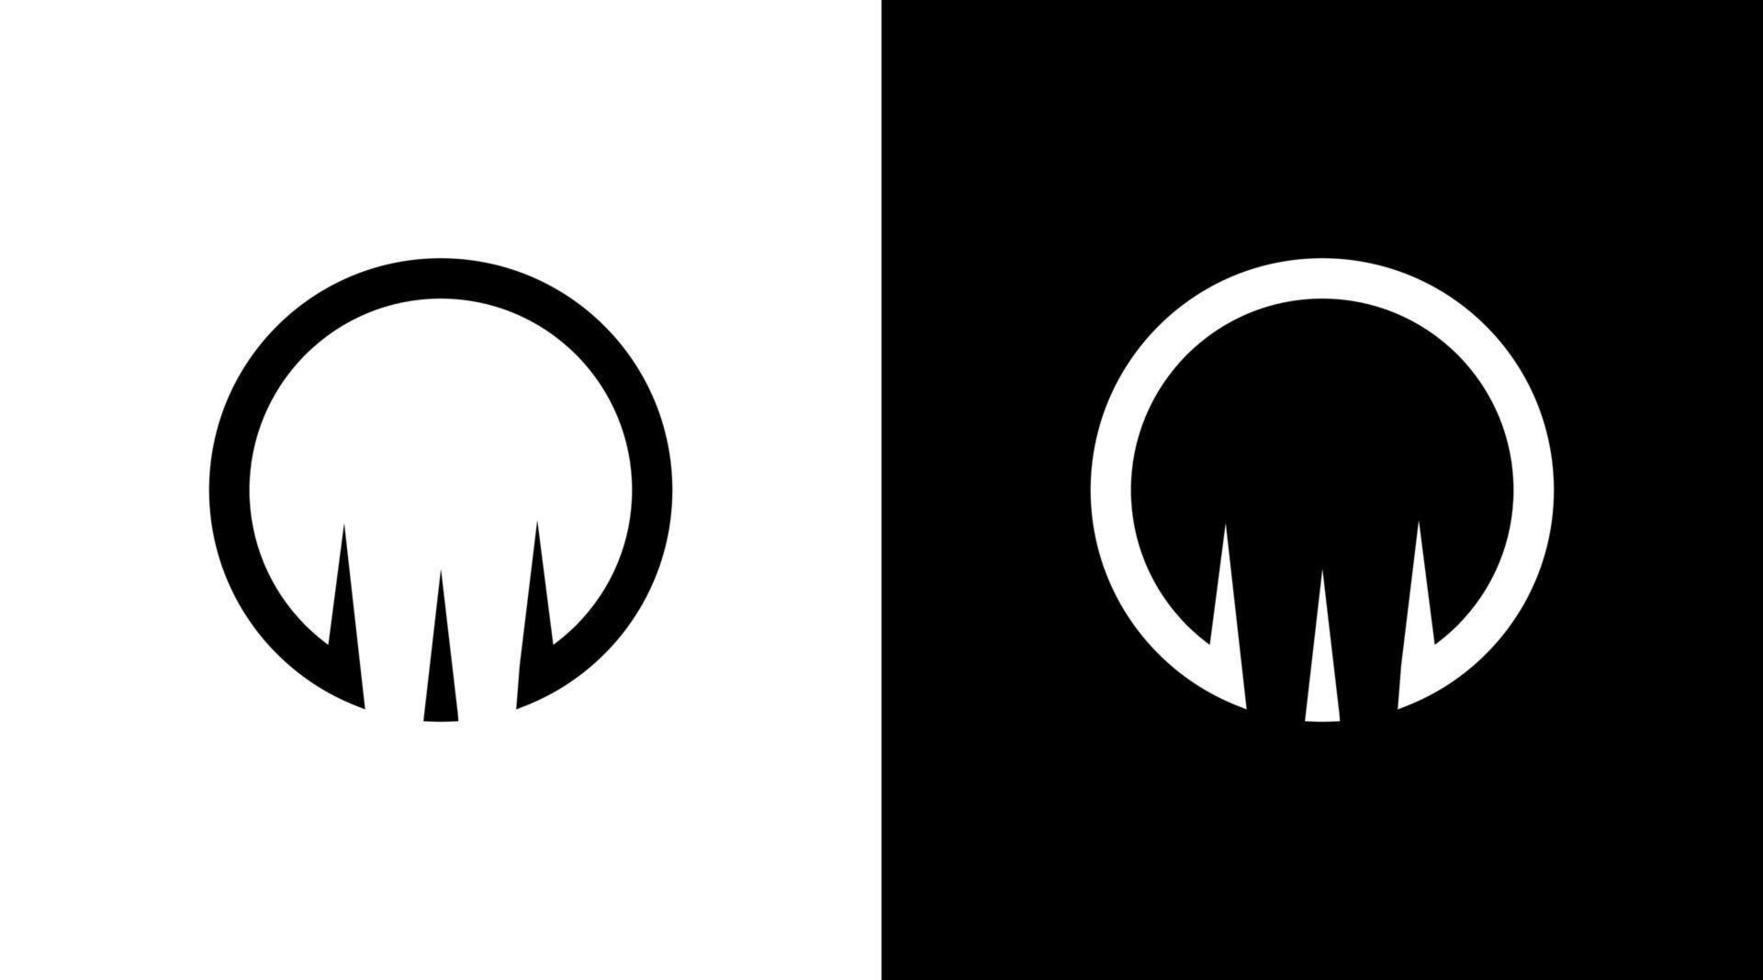 círculo logotipo monograma abstrato ícone preto e branco ilustração modelos de designs de estilo vetor